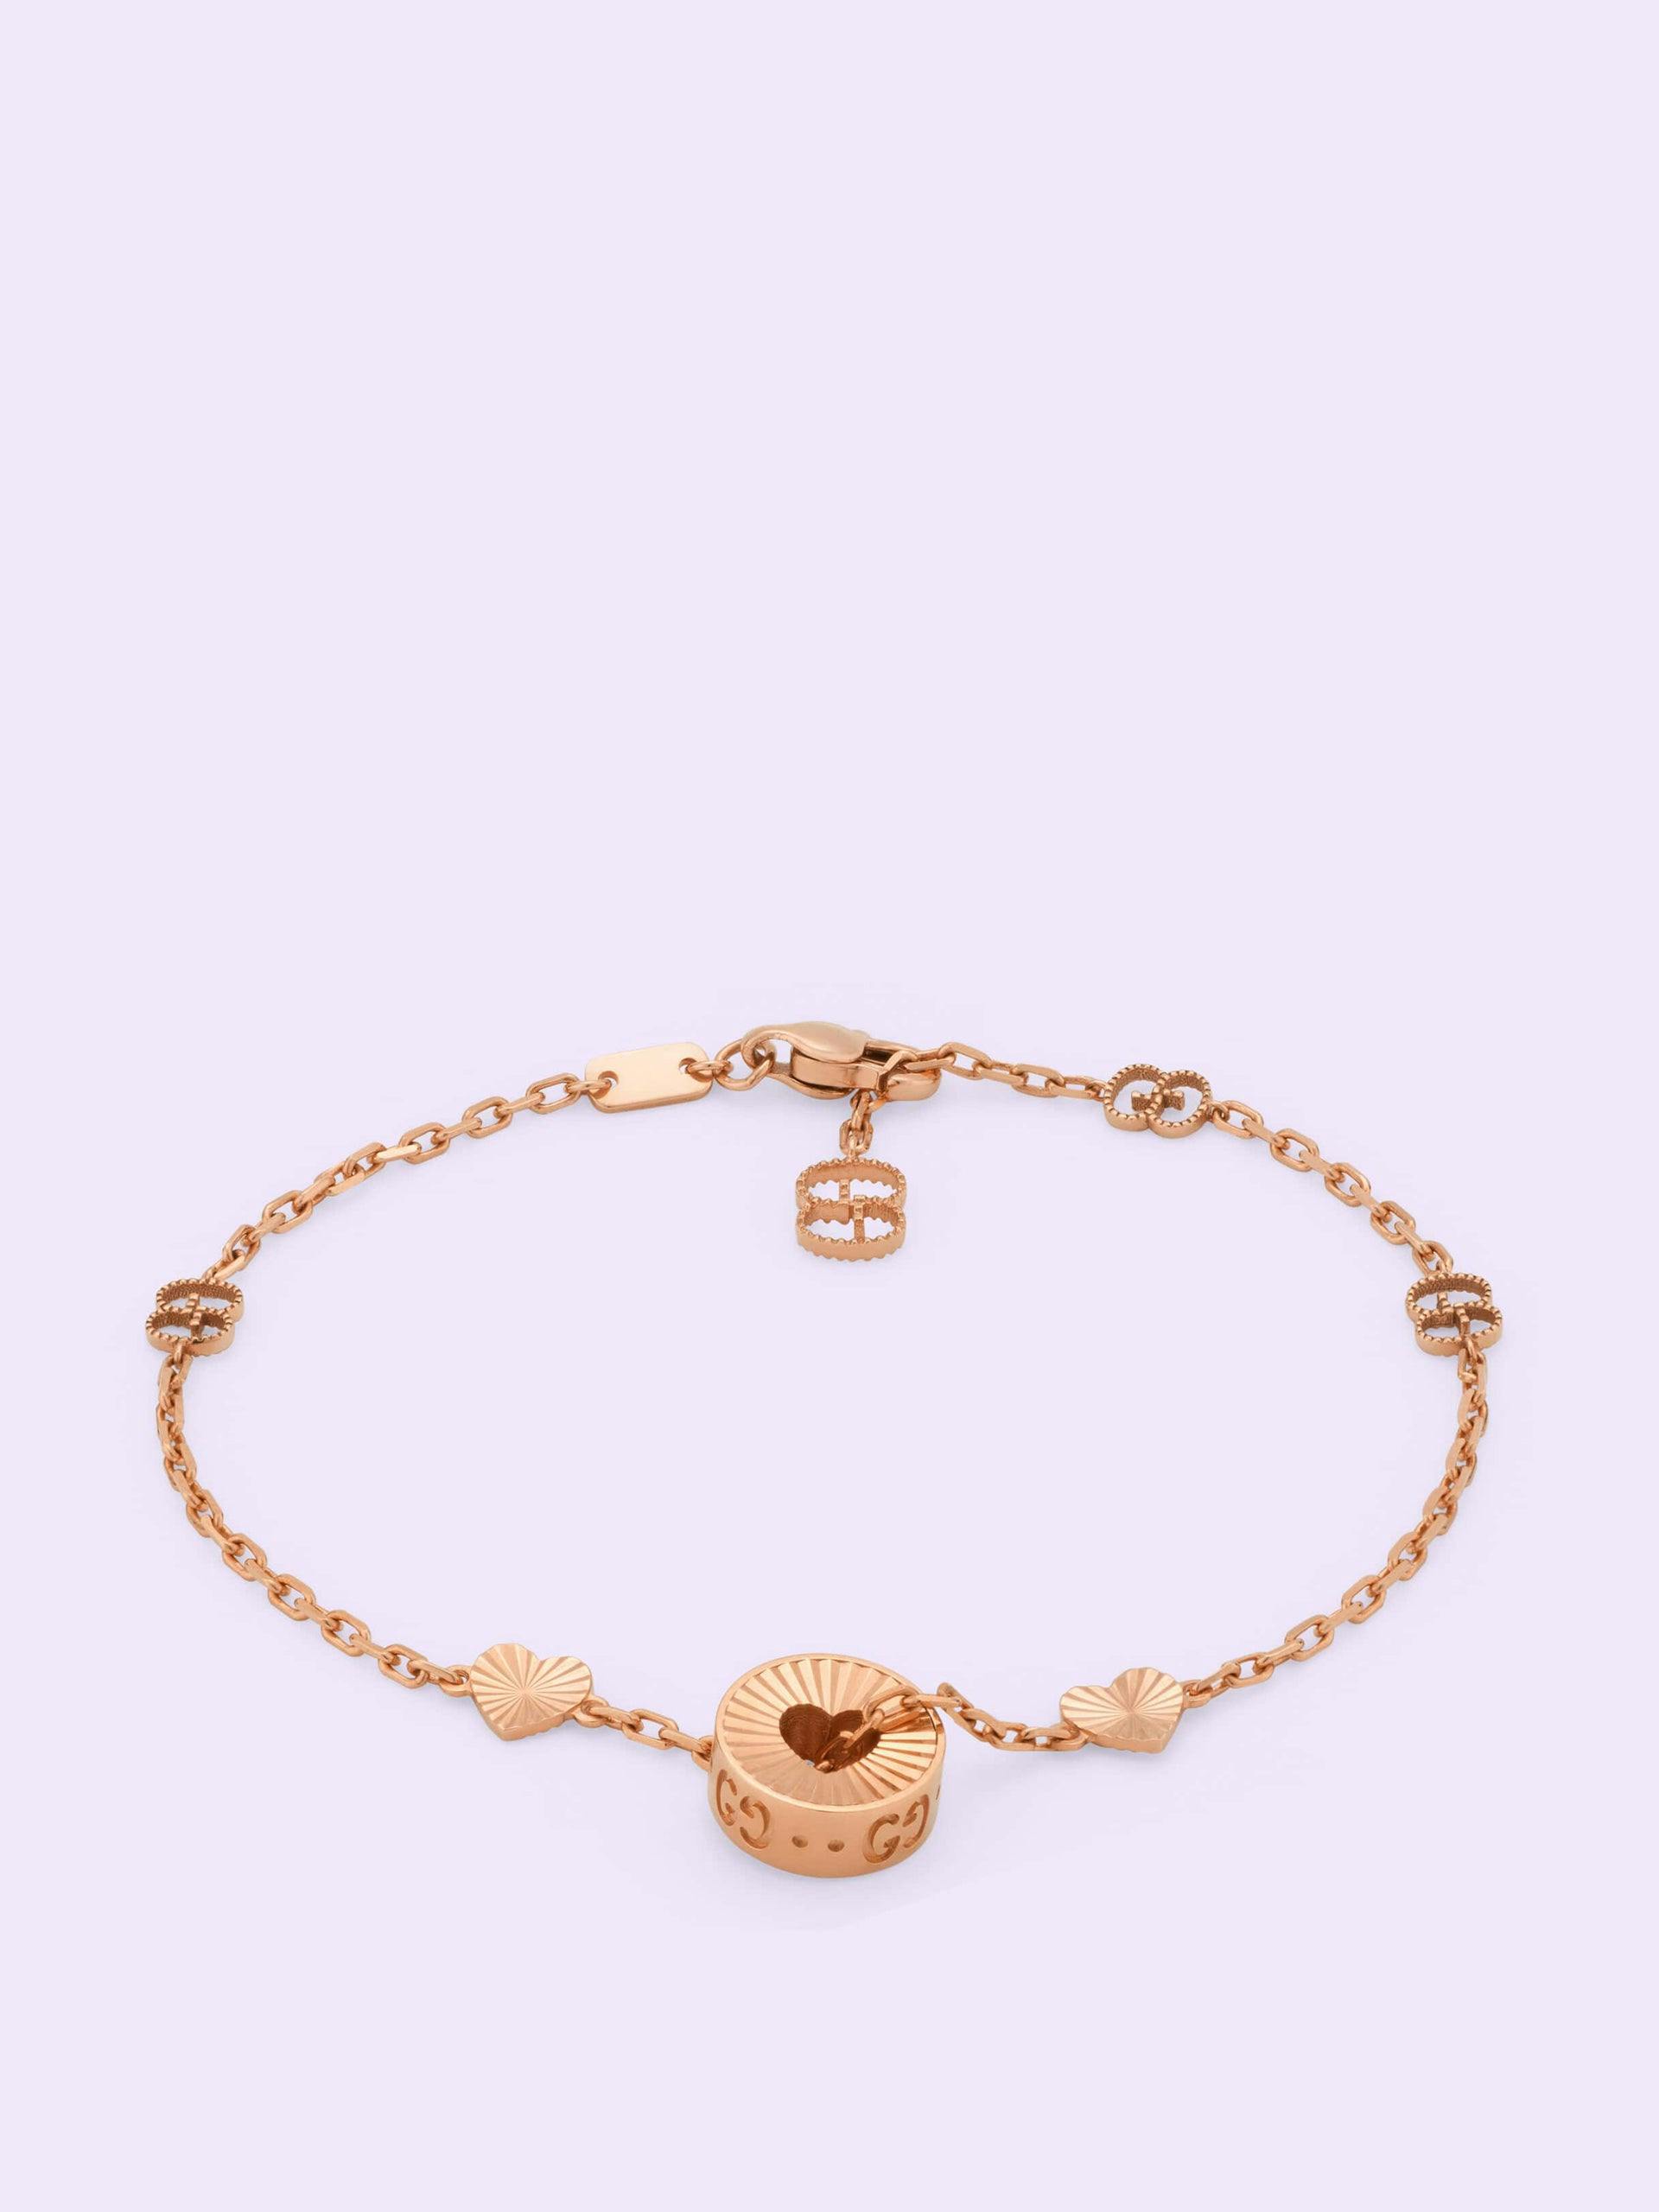 18kt rose gold heart bracelet